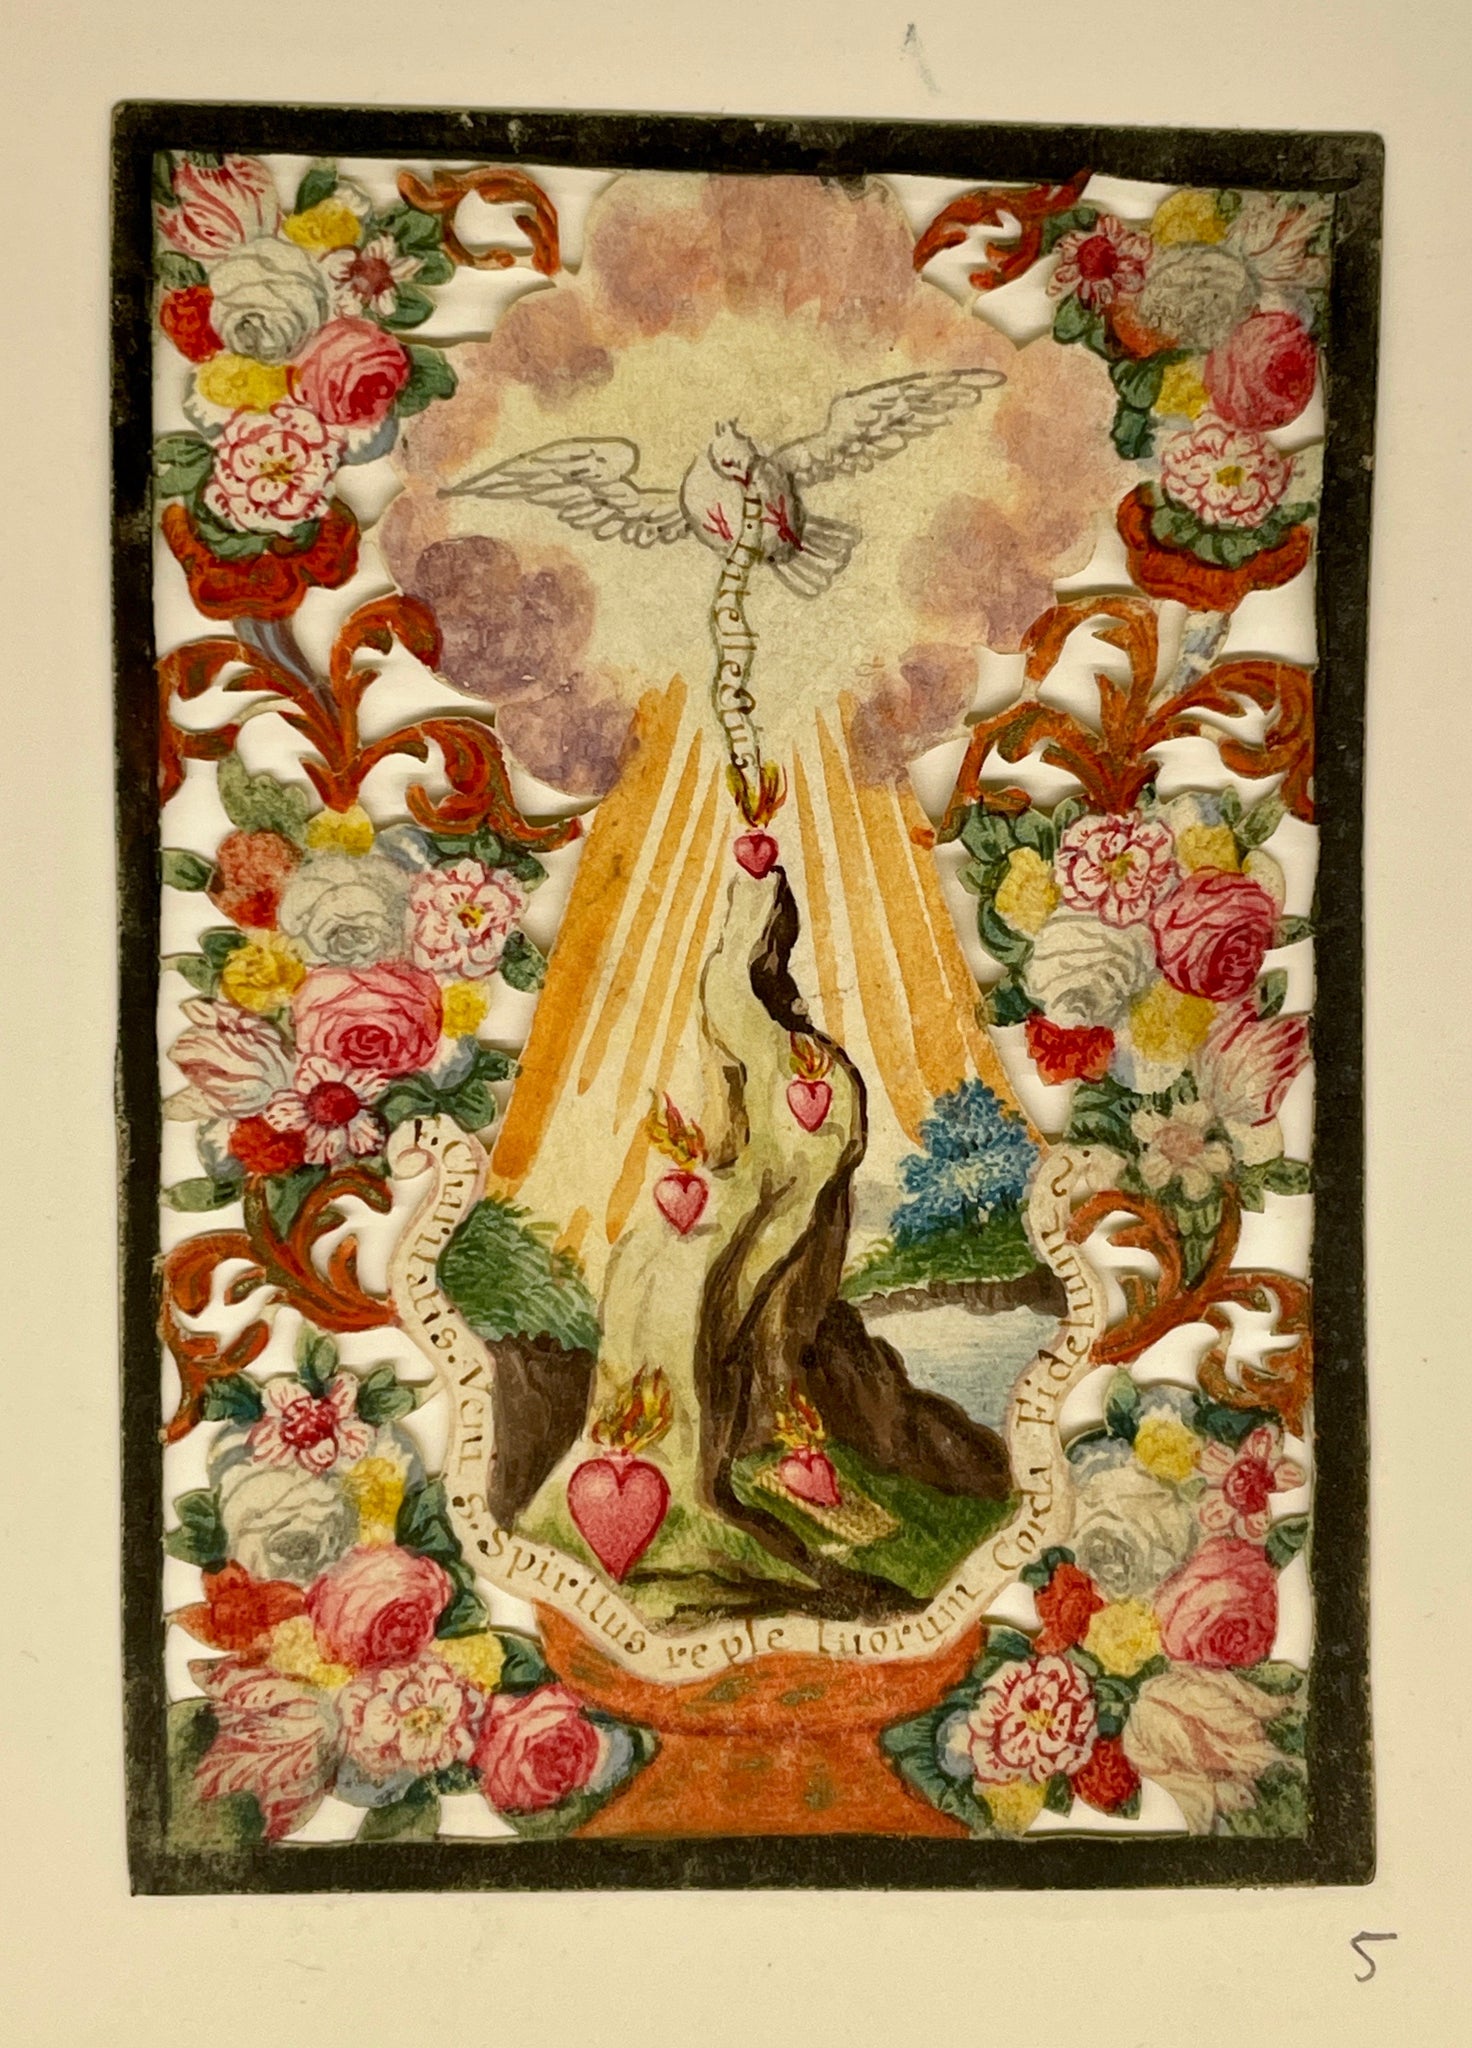 #5 - Handpainted Devotional Prayer Card, ca. 1820